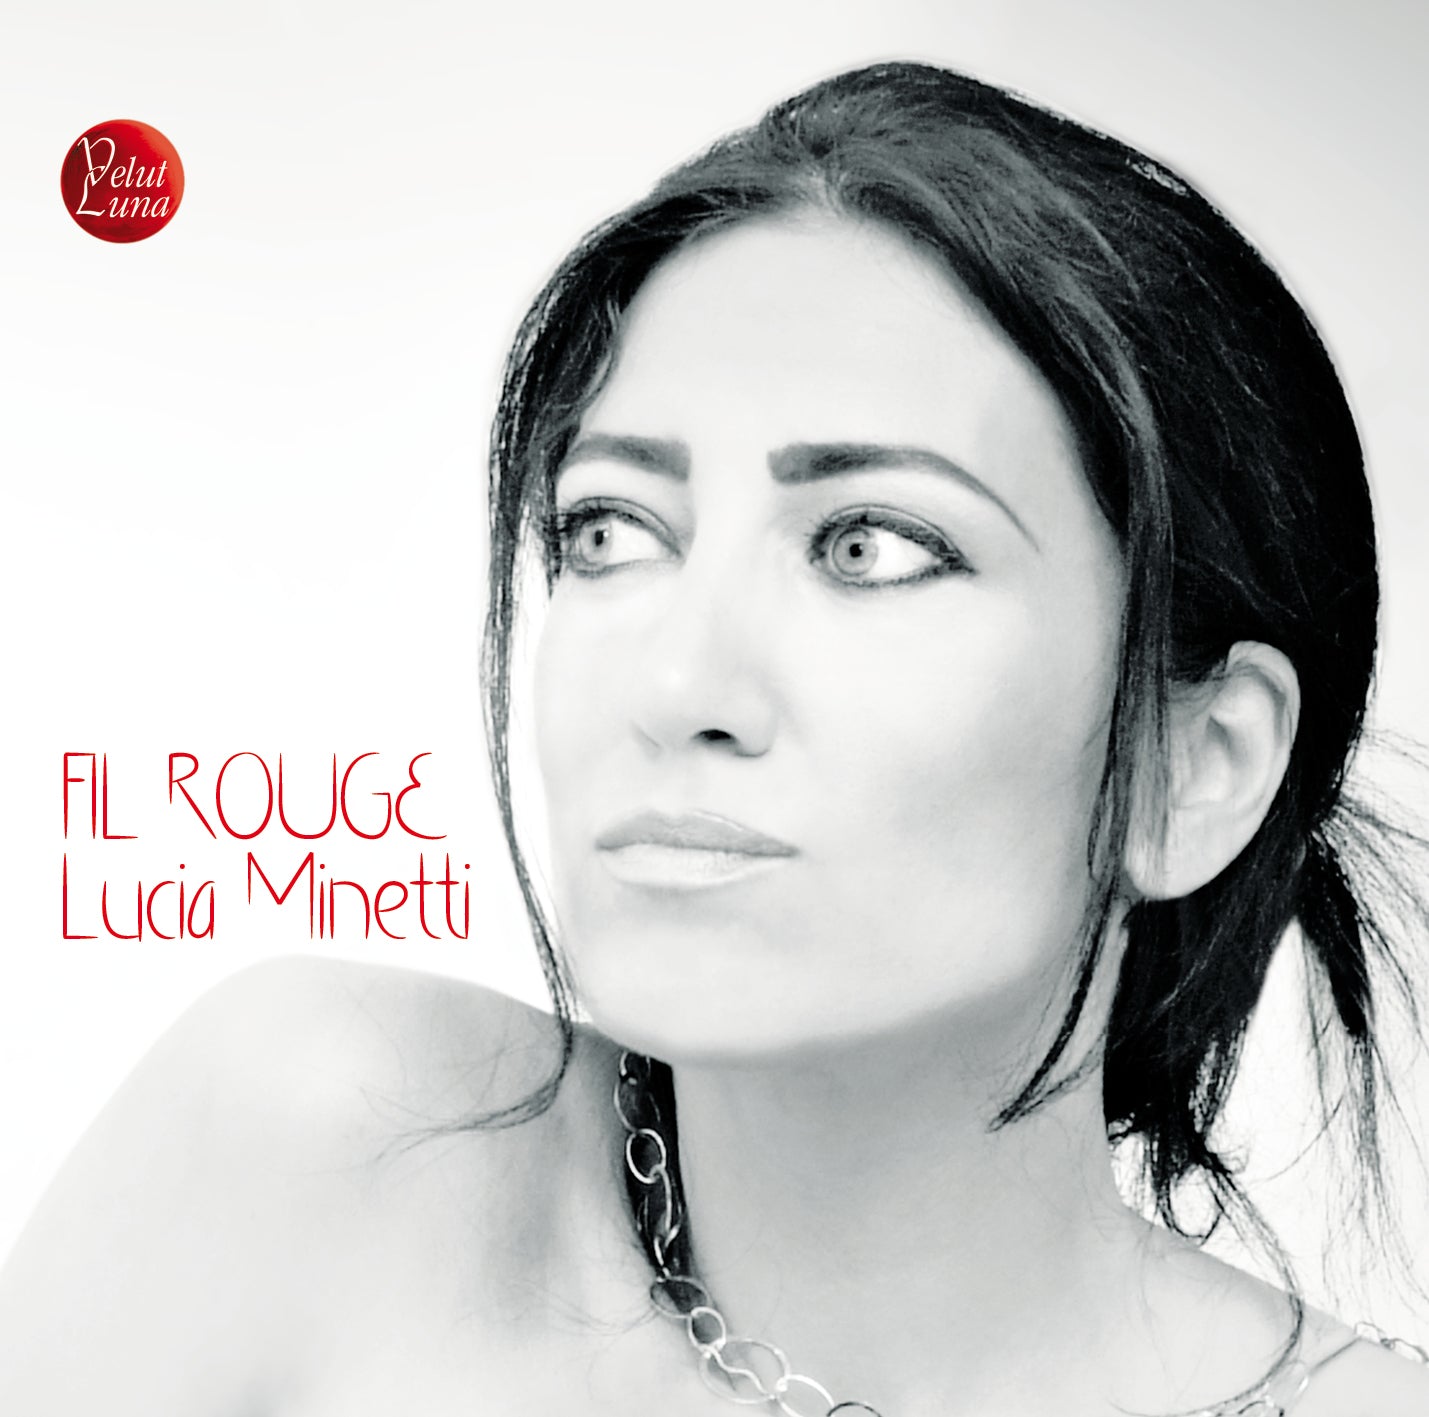 FIL ROUGE - Lucia Minetti